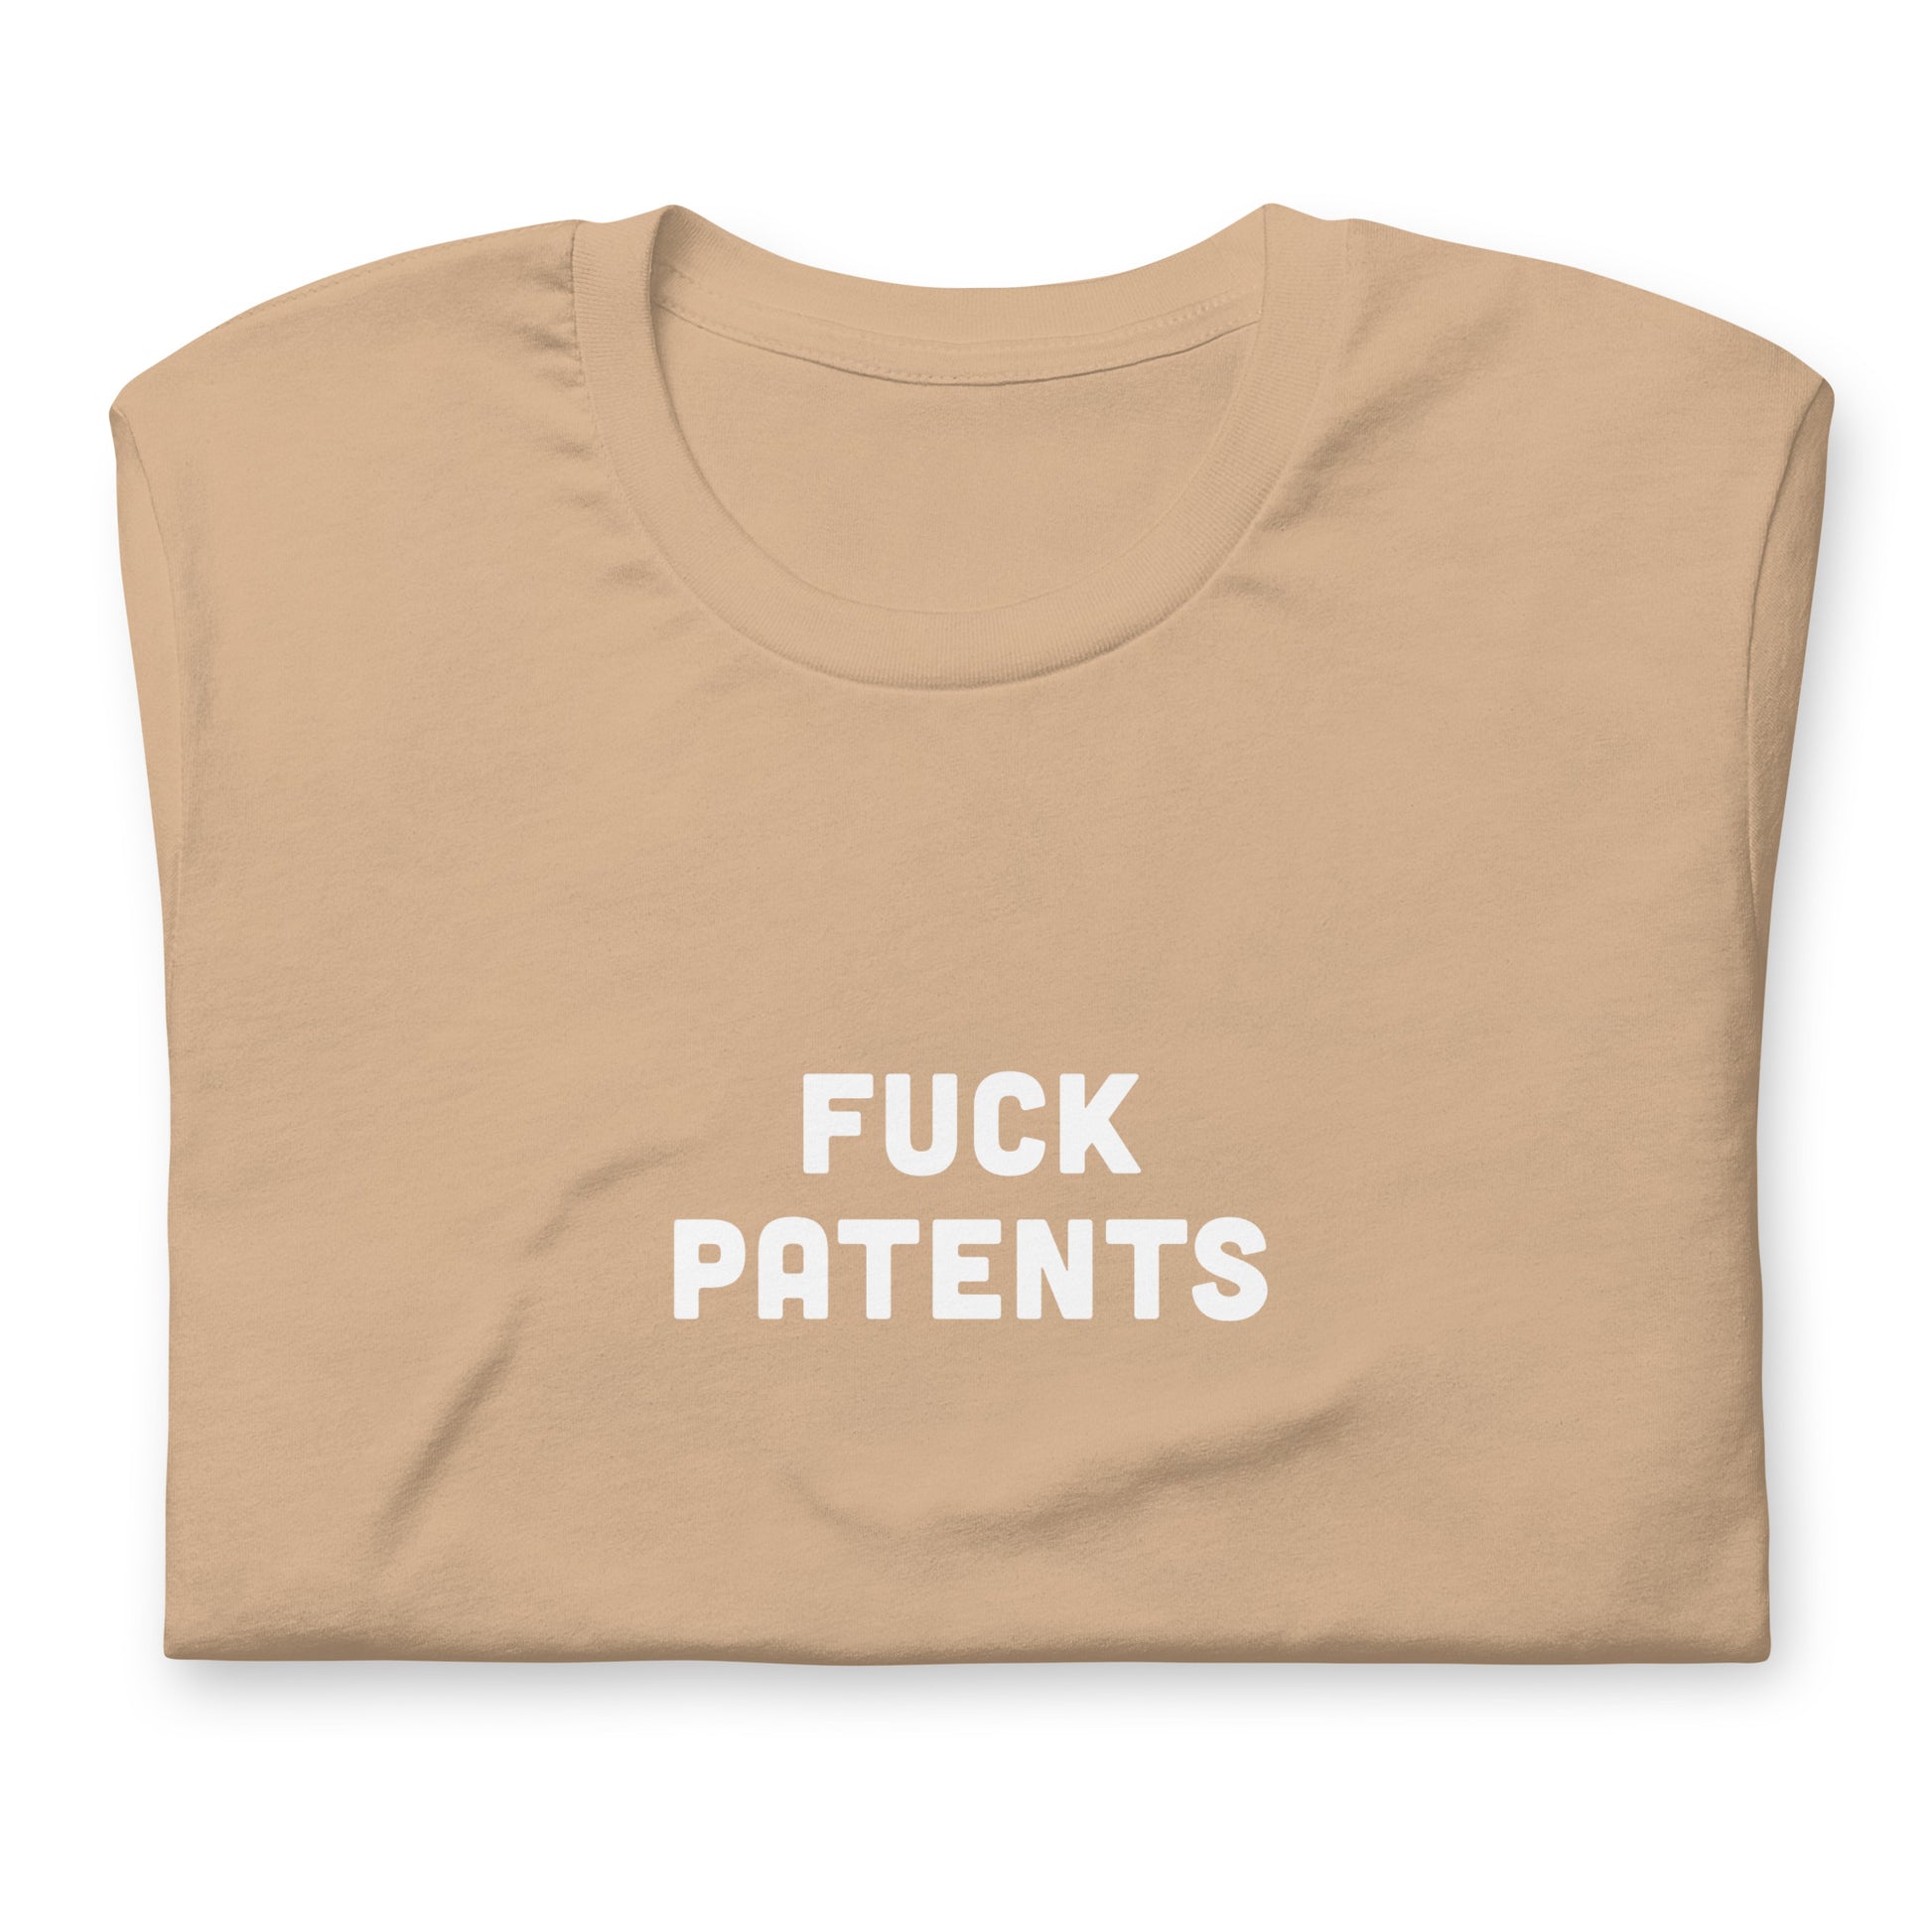 Fuck Patents T-Shirt Size 2XL Color Forest